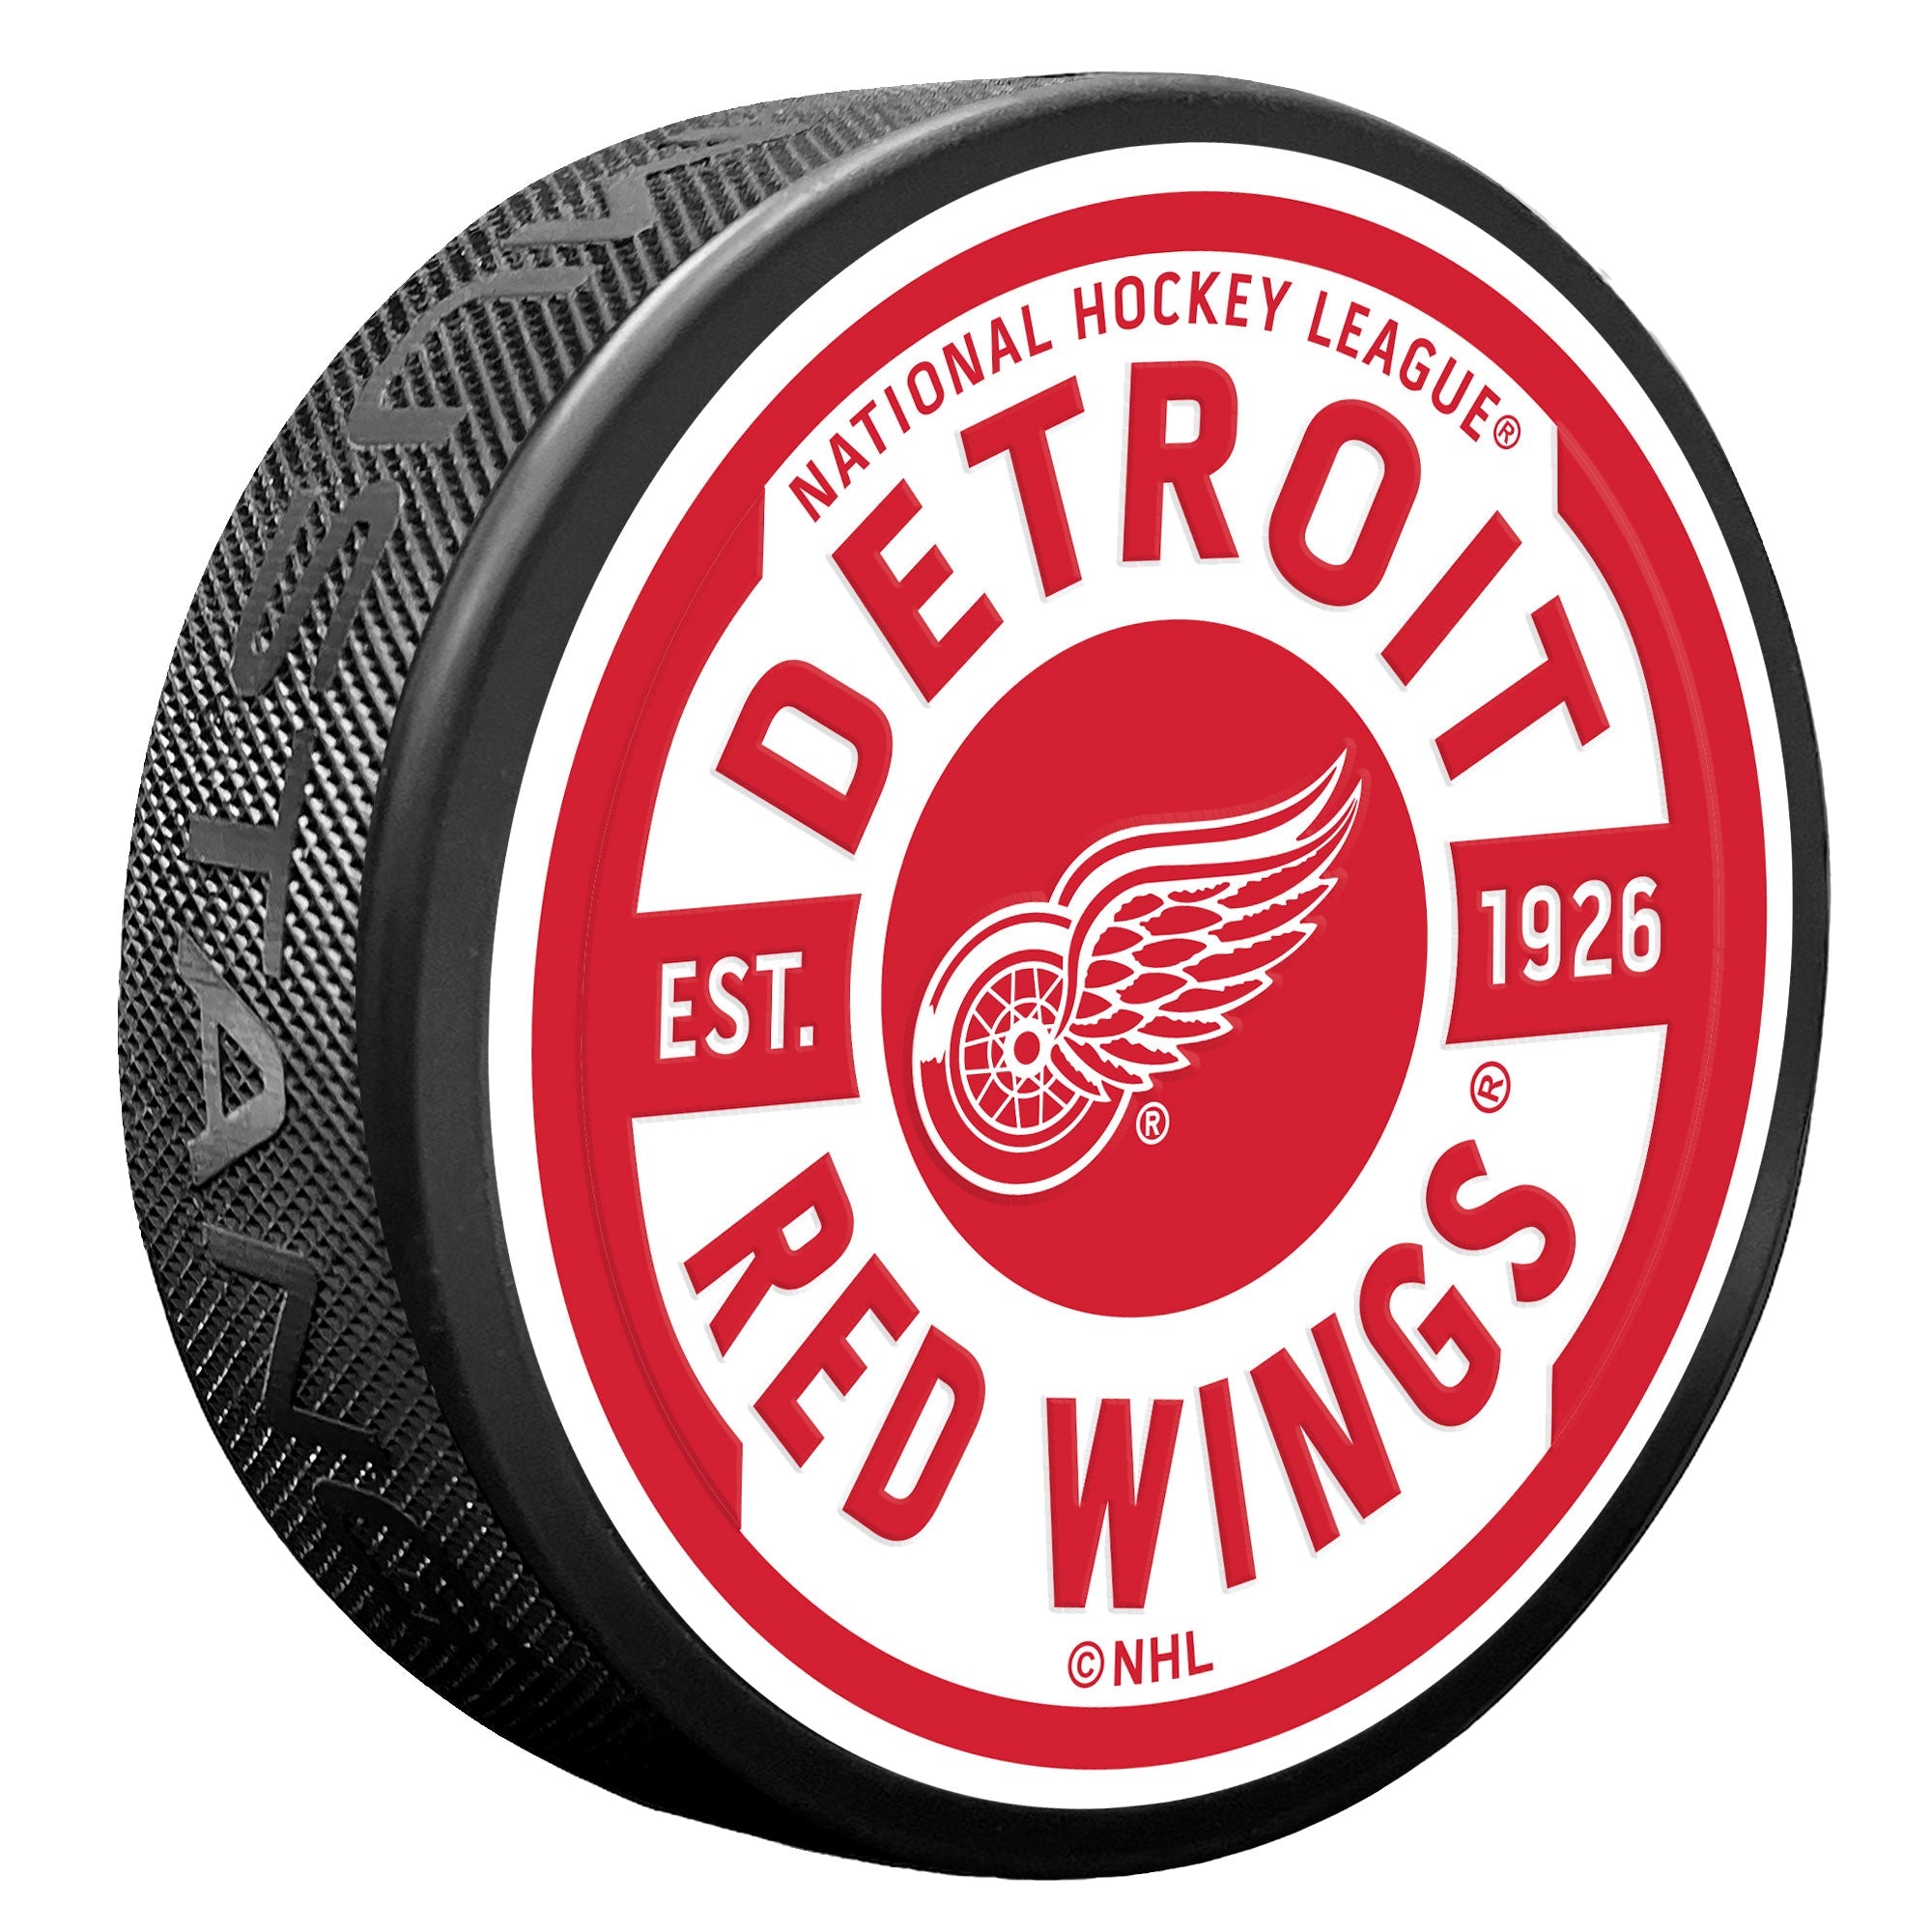 Detroit Red Wings Gear Hockey Puck